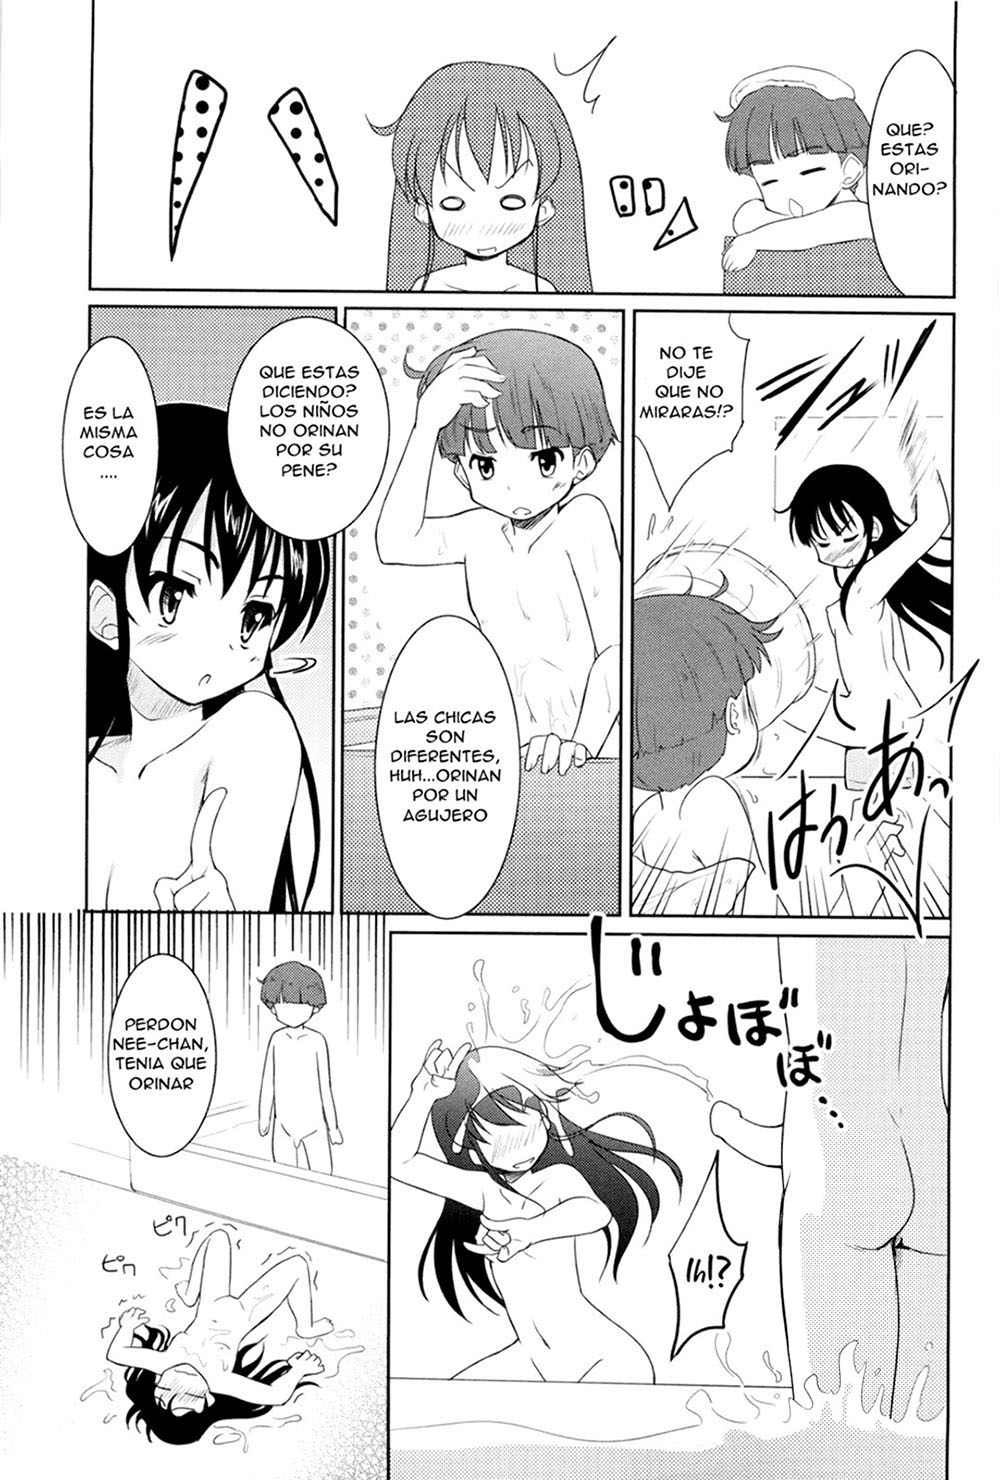 Violando a mi Hermana en el Baño - 5 - Comics Porno - Hentai Manga - Cartoon XXX